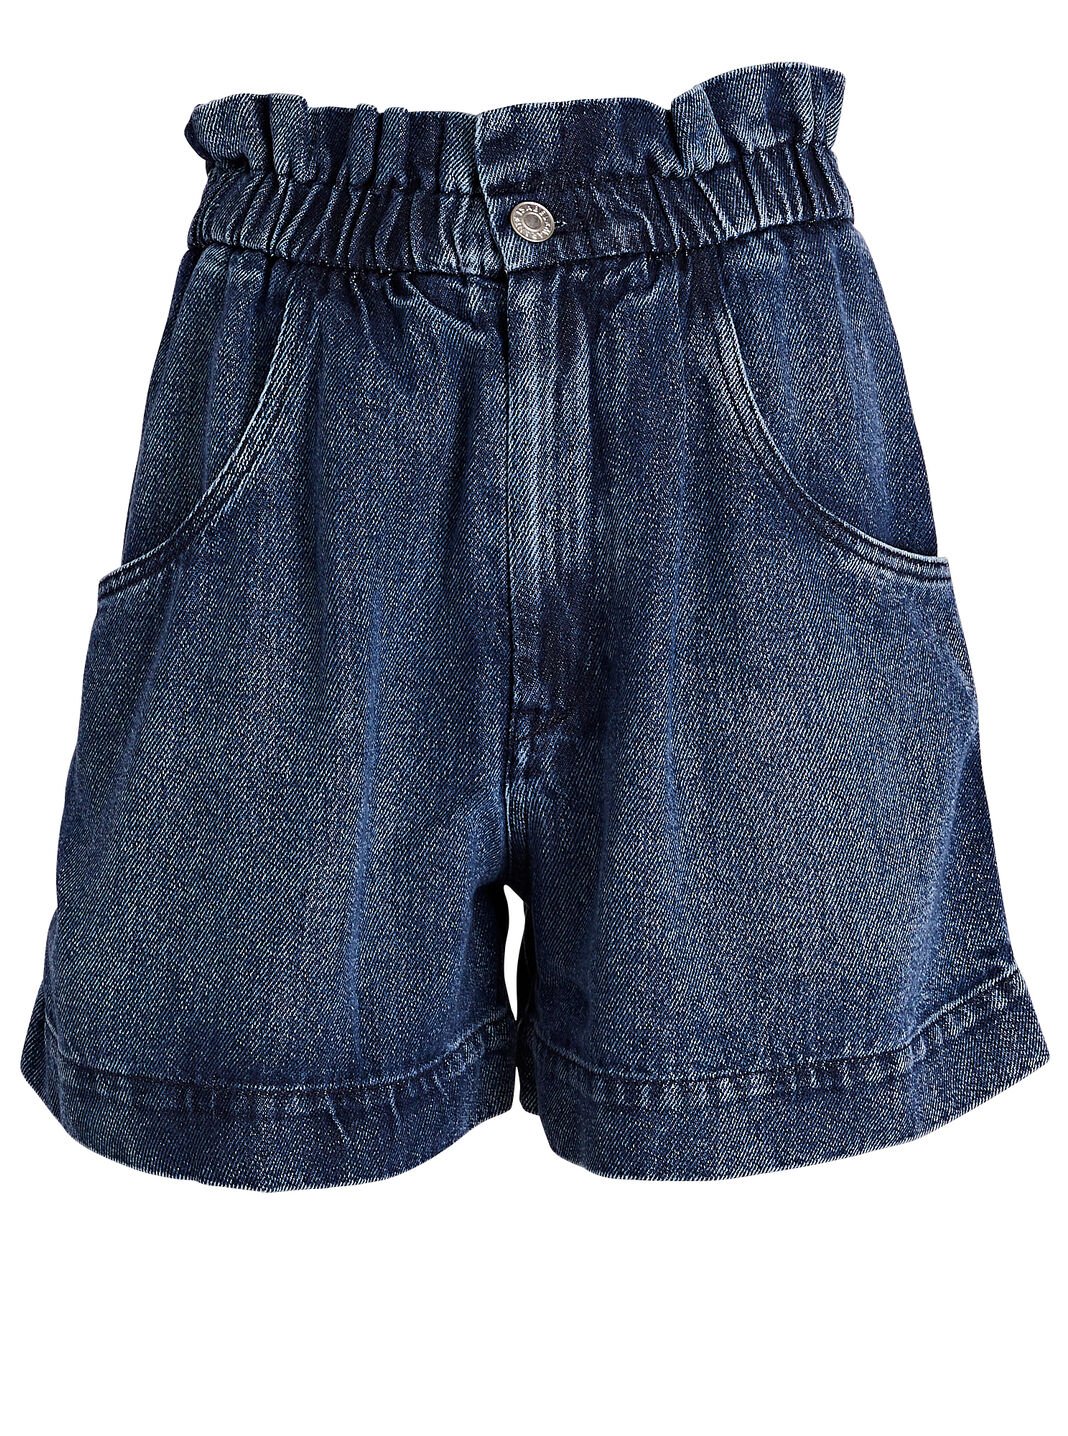 Titea Denim Paperbag Shorts